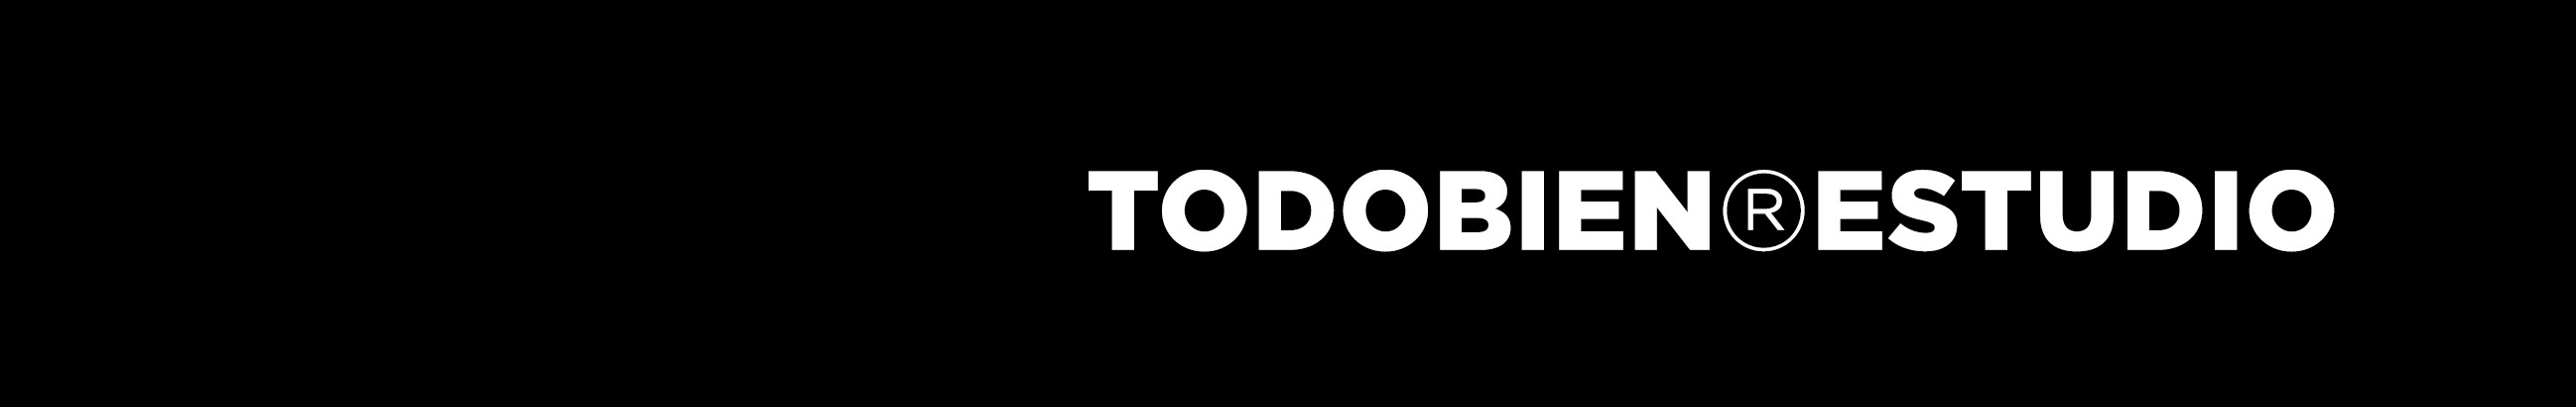 TODOBIEN ESTUDIO's profile banner